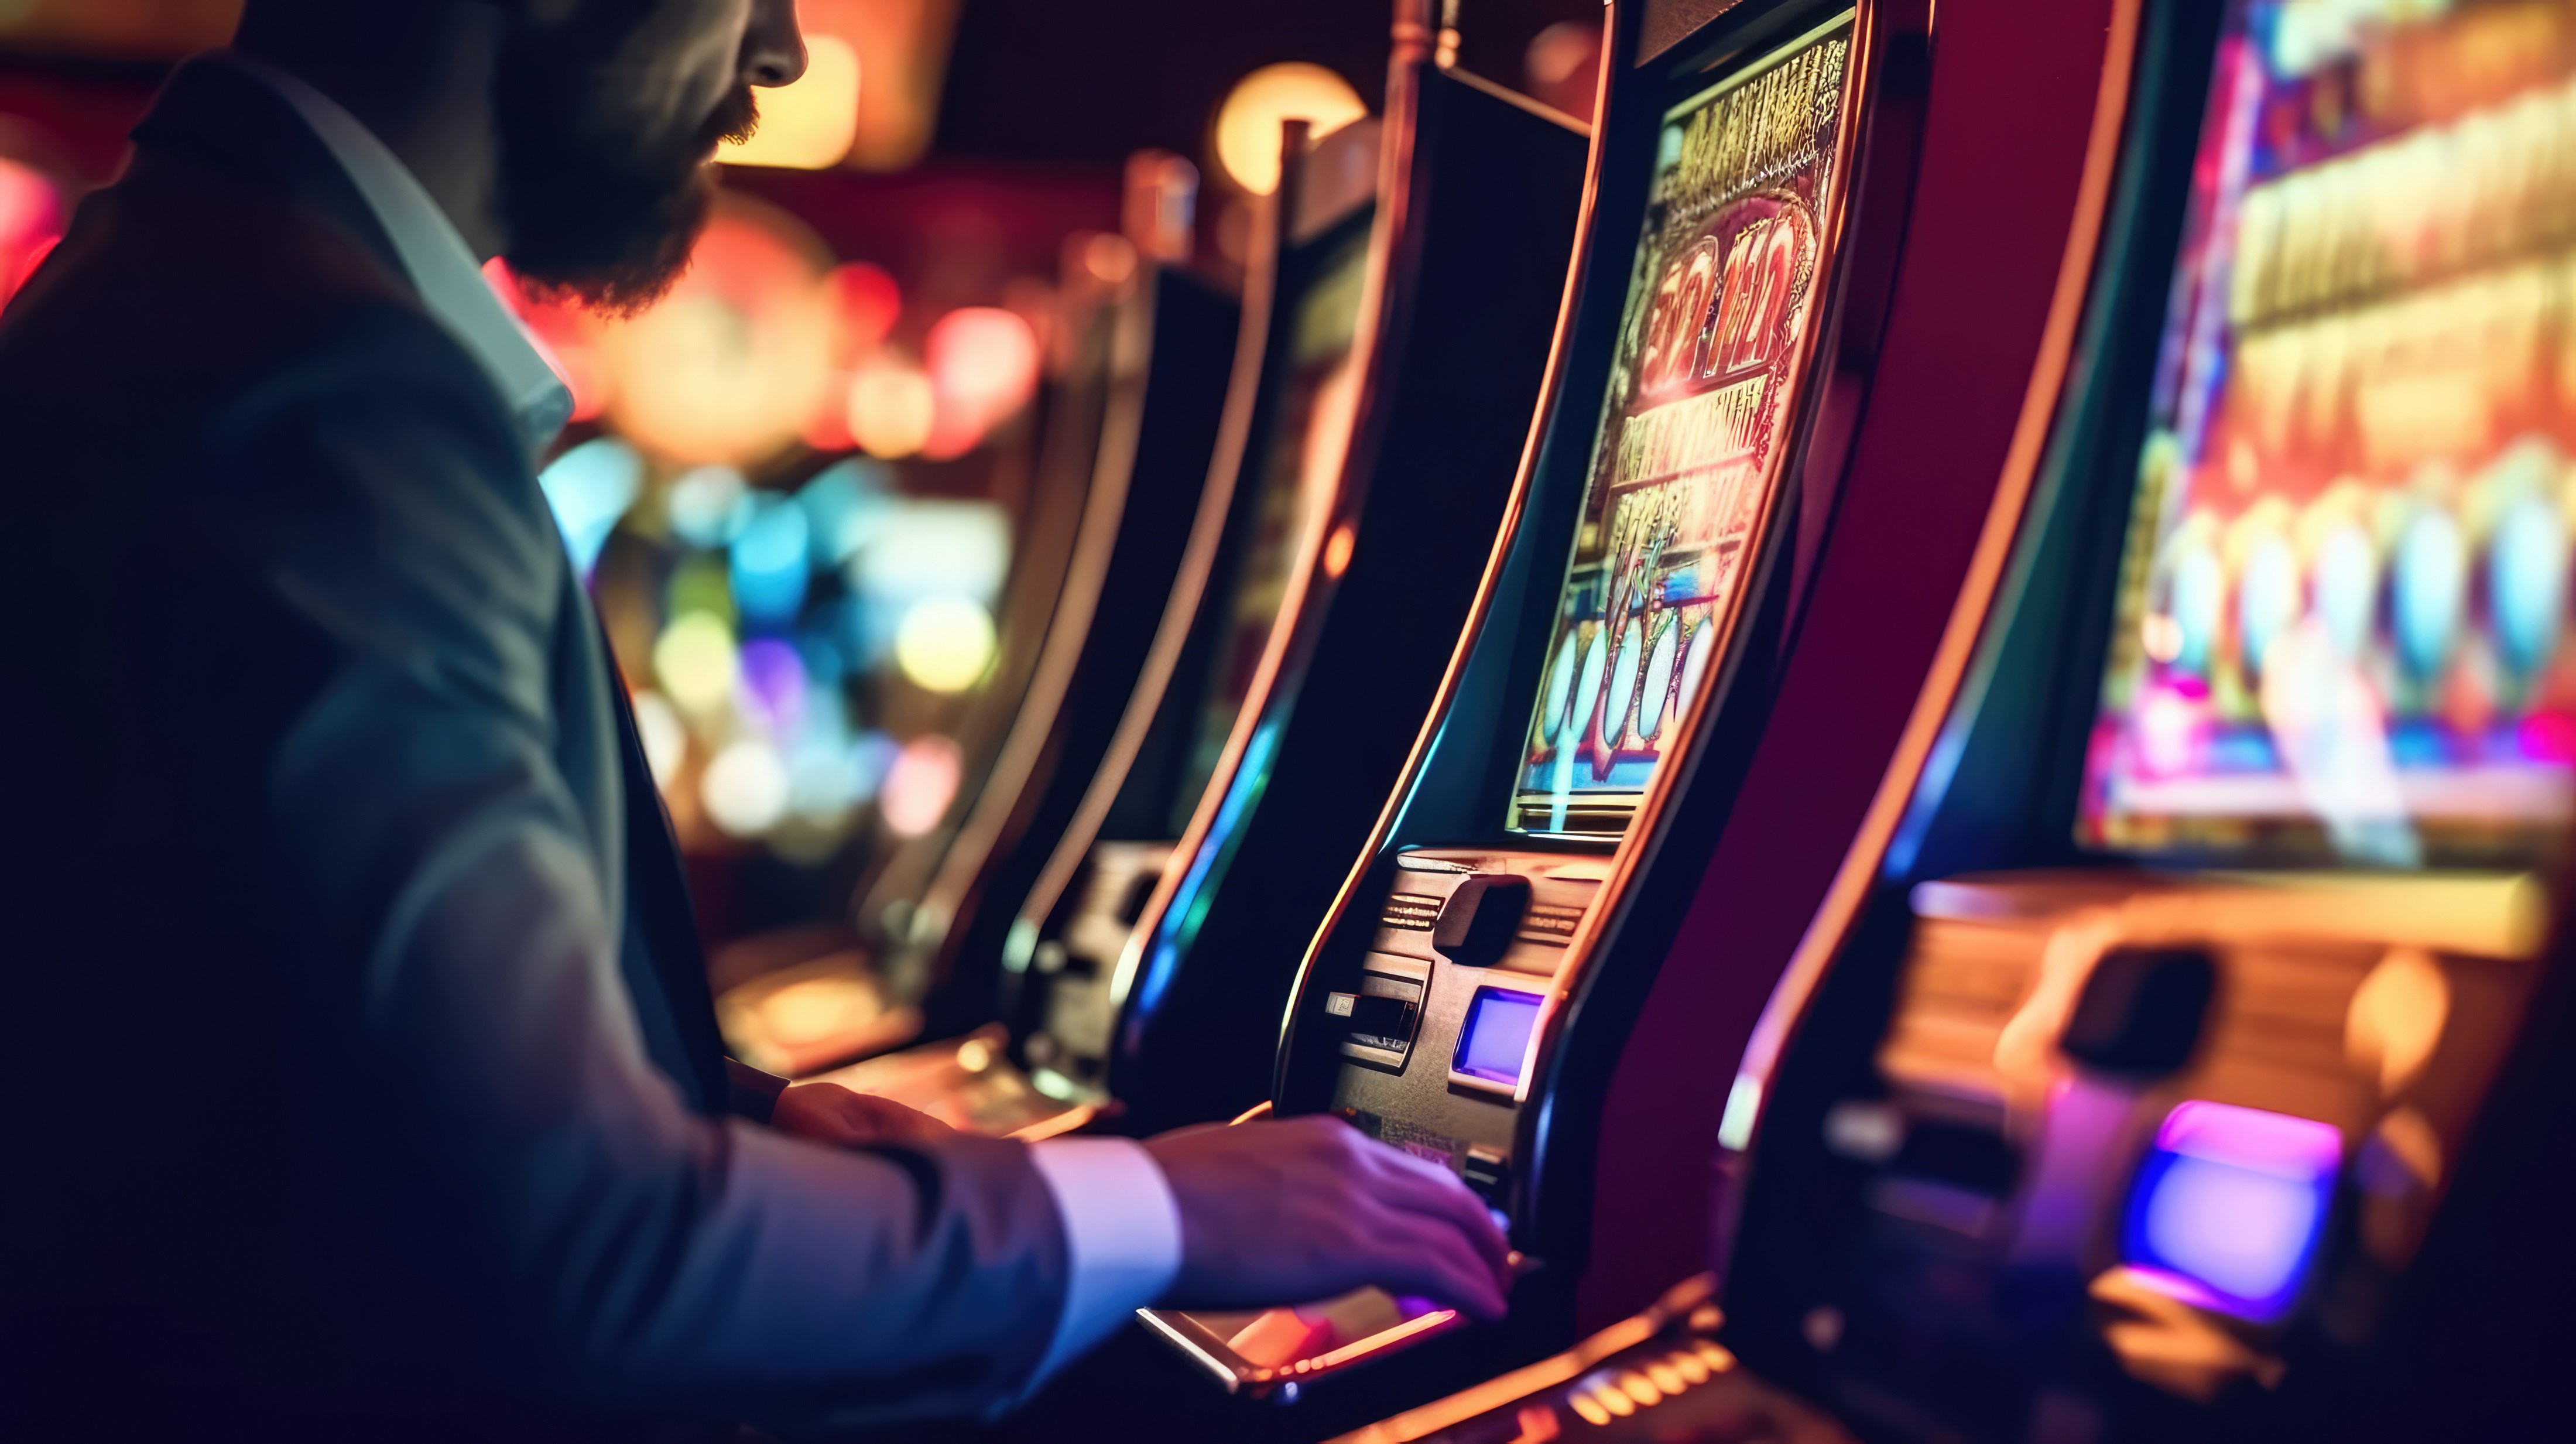 Legislative amendments will see poker machine venues close by 4 am.